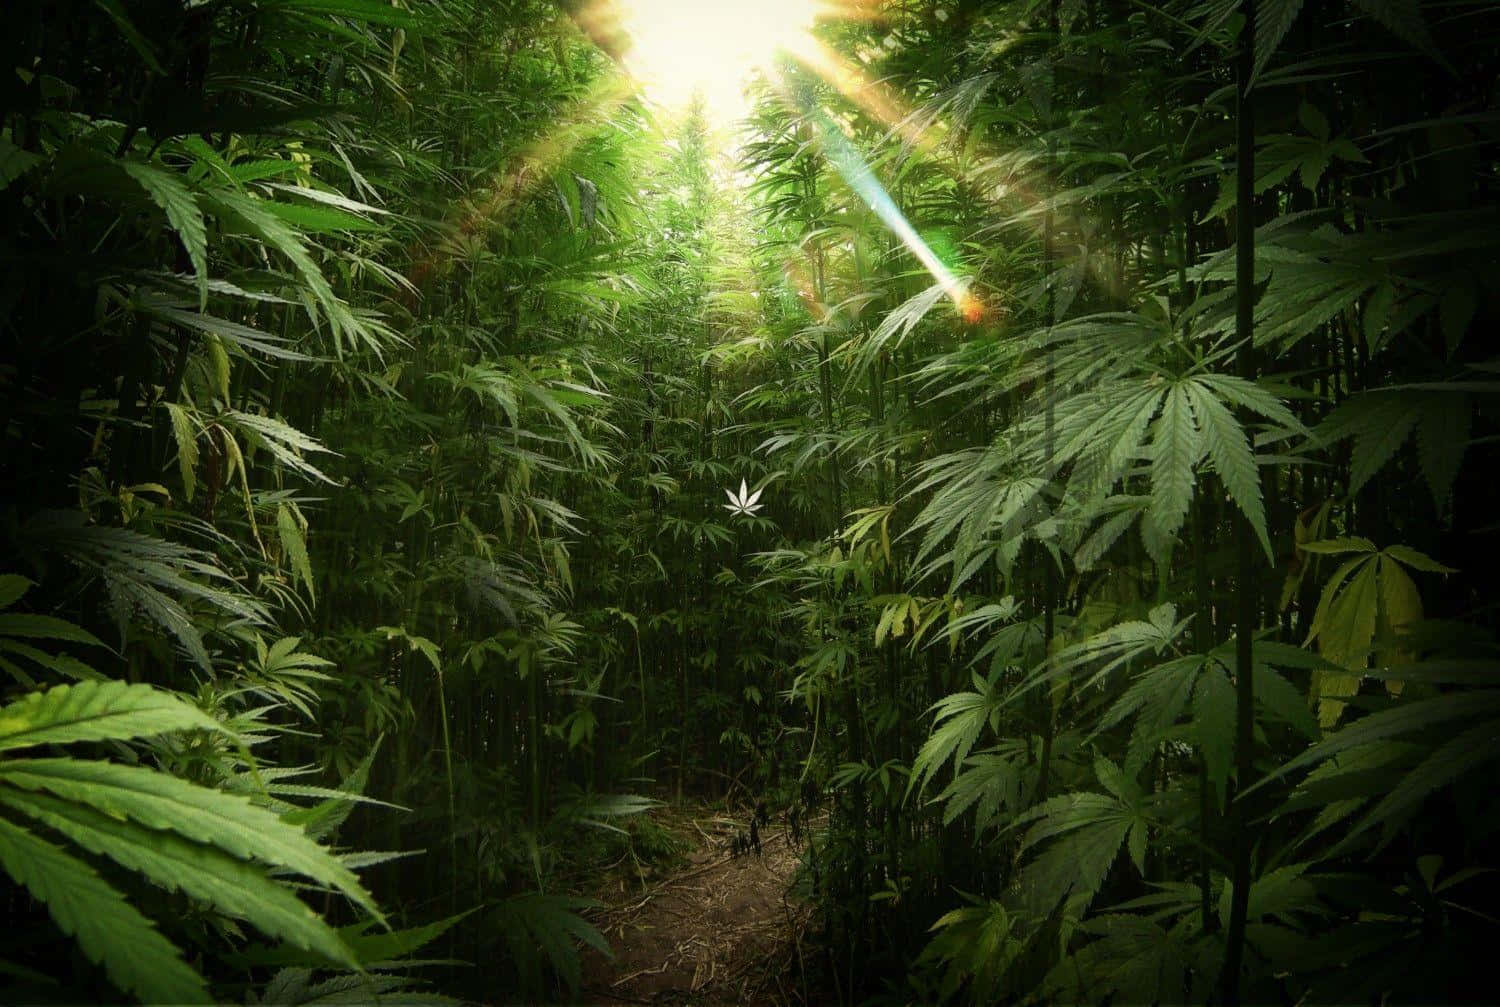 Enjoy a calming high with cannabis